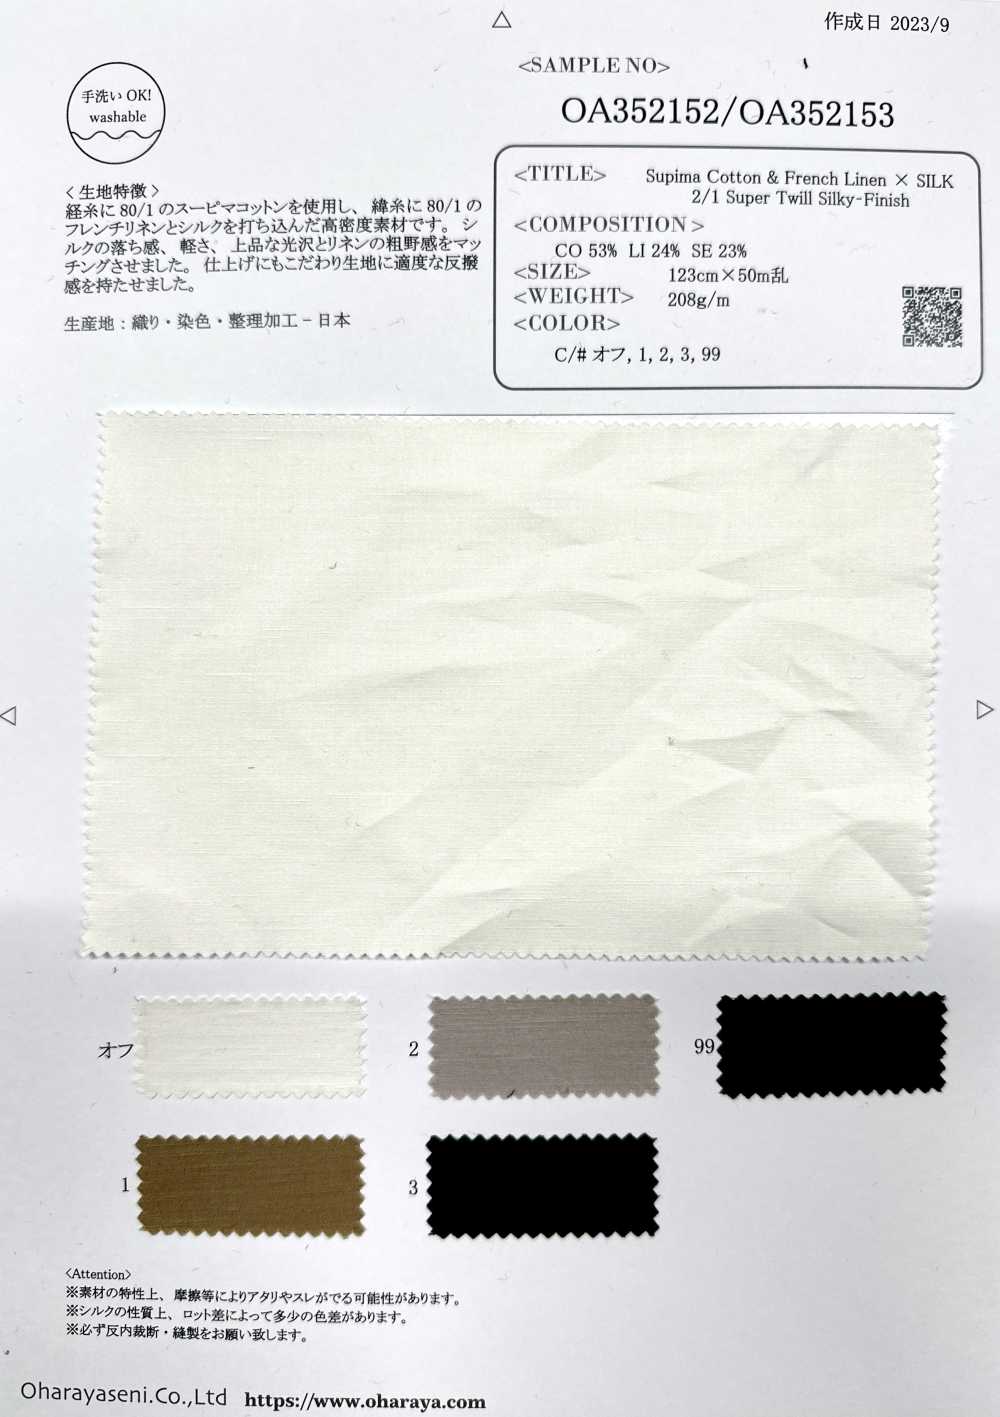 OA352153 蘇比馬棉 & 法國亞麻 × SILK 2/1 超斜紋絲光飾面[面料] 小原屋繊維